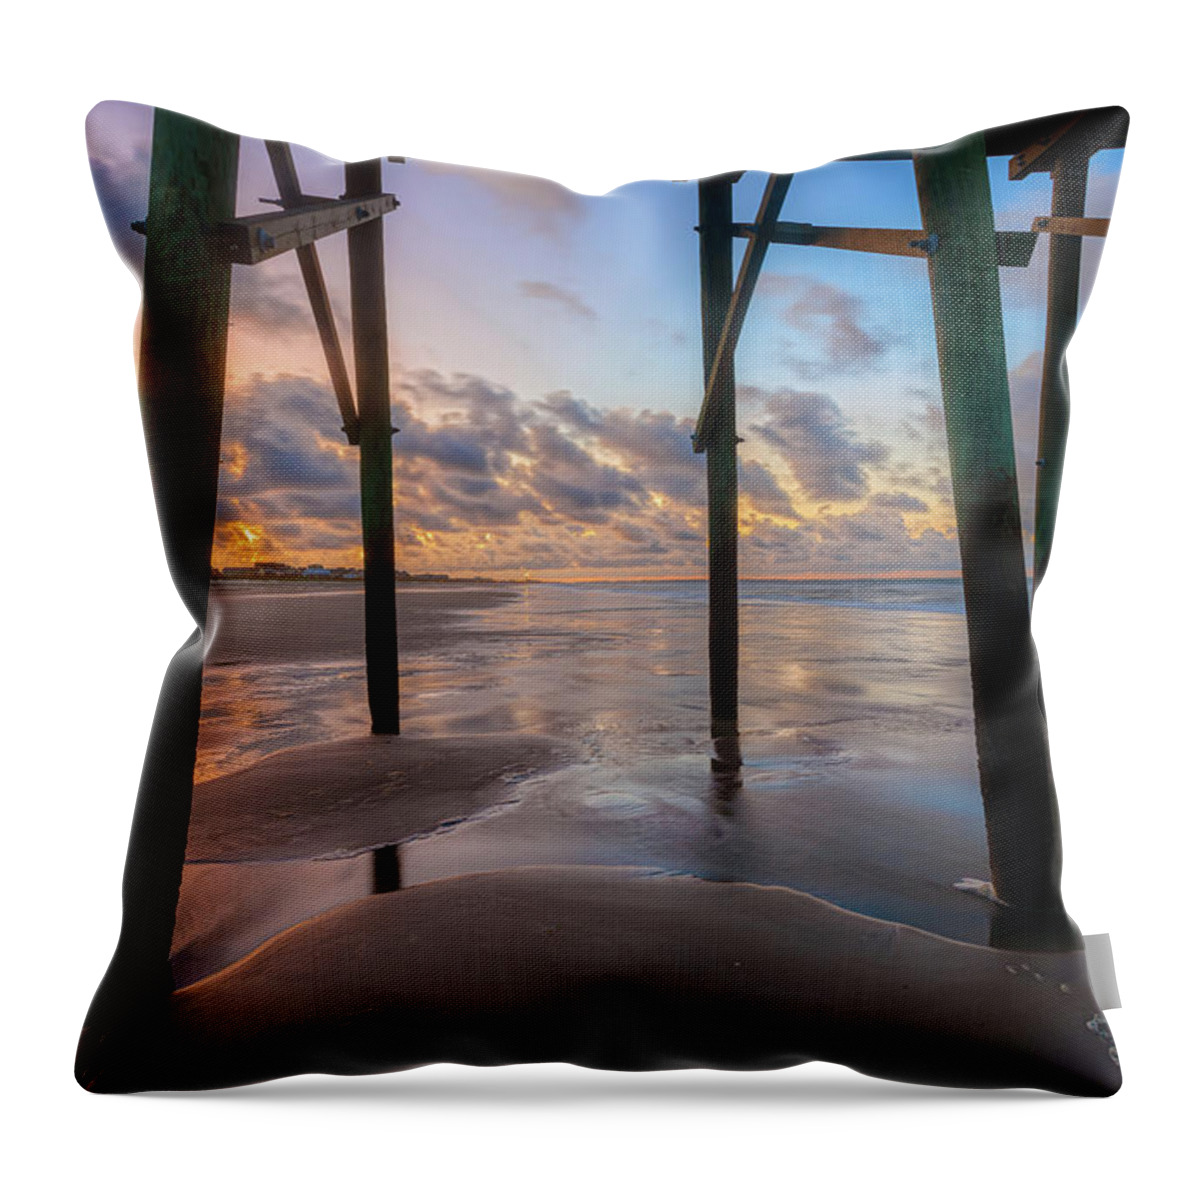 Oak Island Throw Pillow featuring the photograph Oak Island Pier Sunrise by Nick Noble